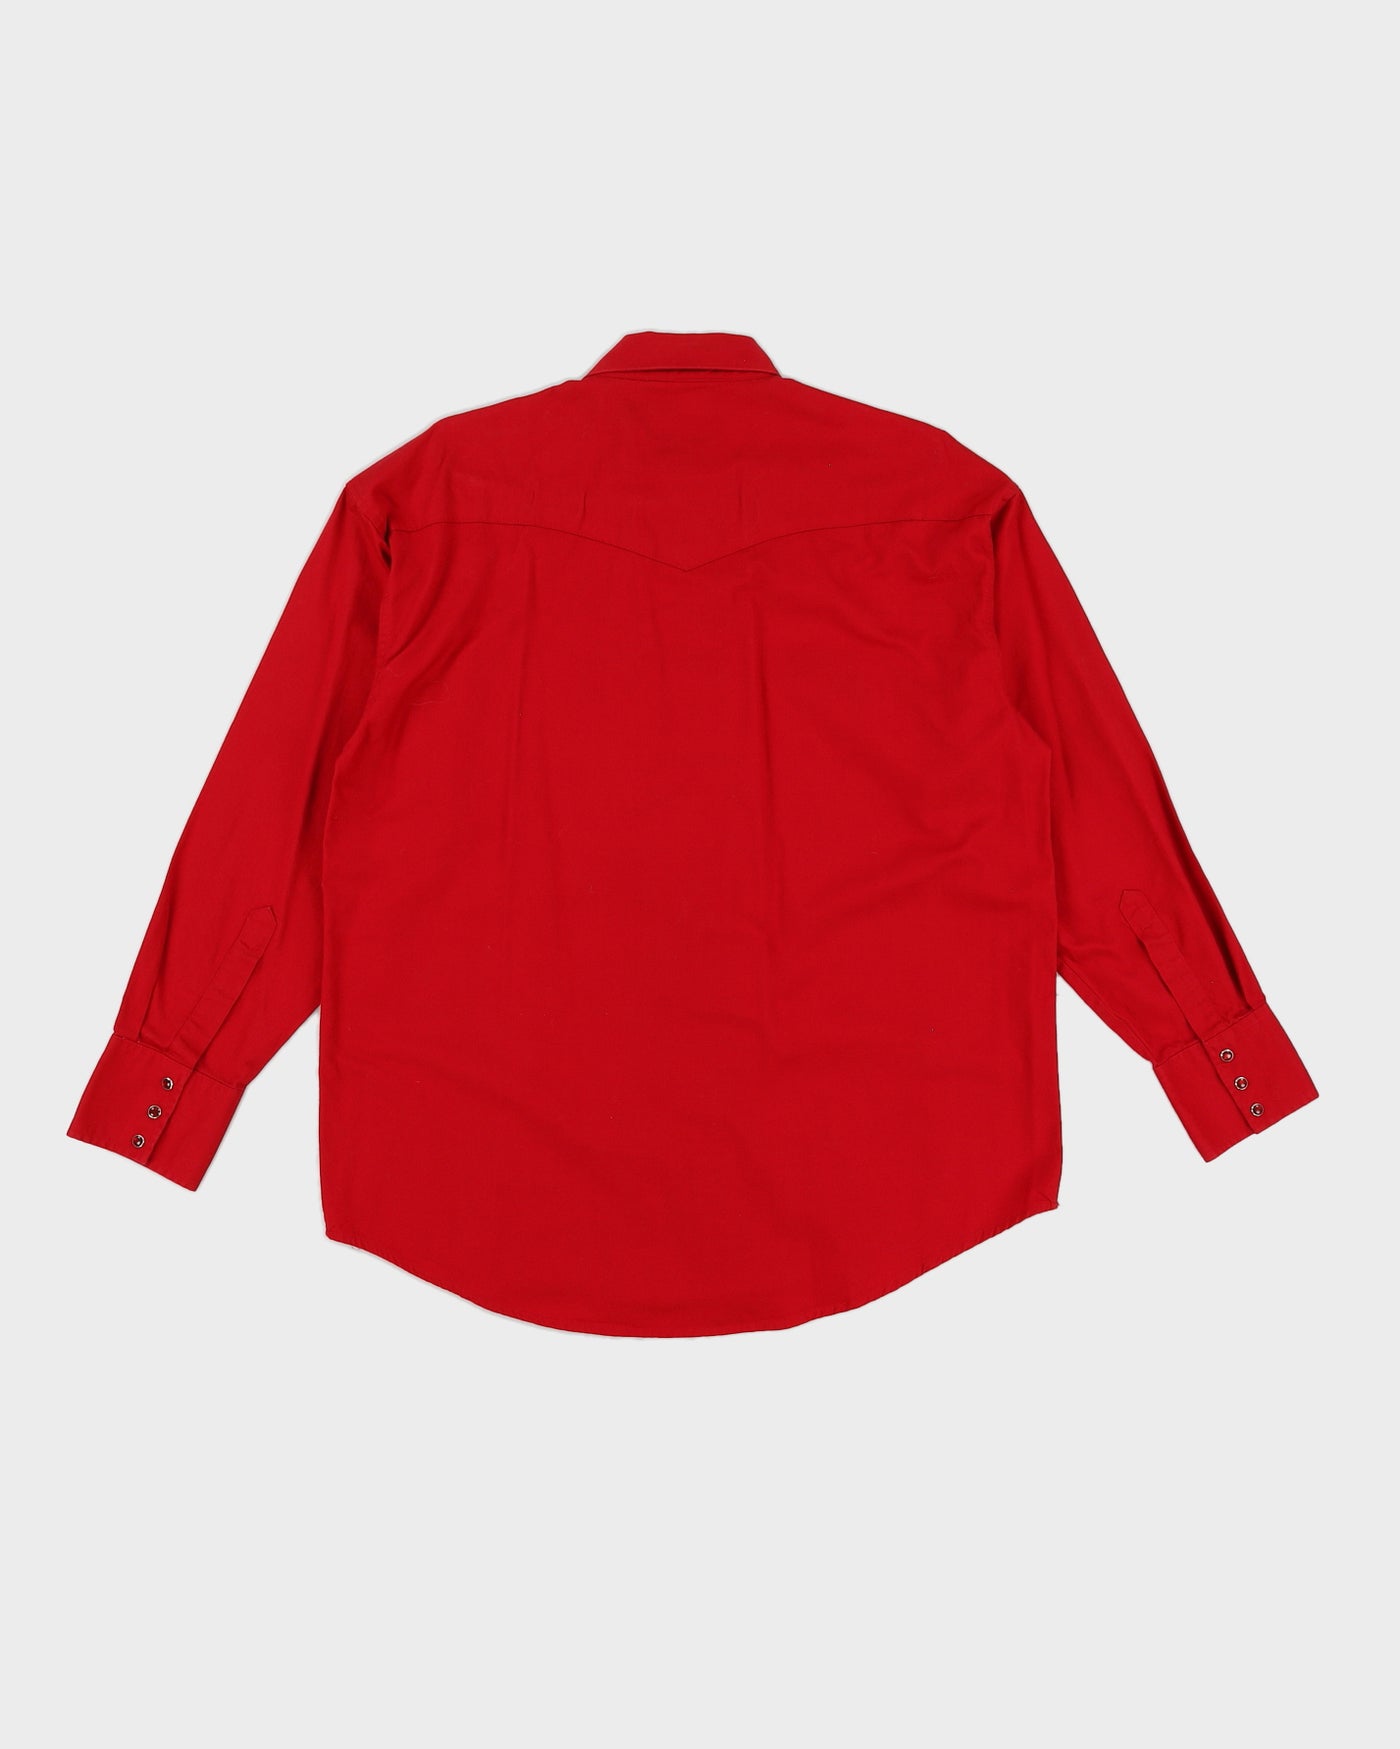 Vintage Red Wrangler Shirt - XXL